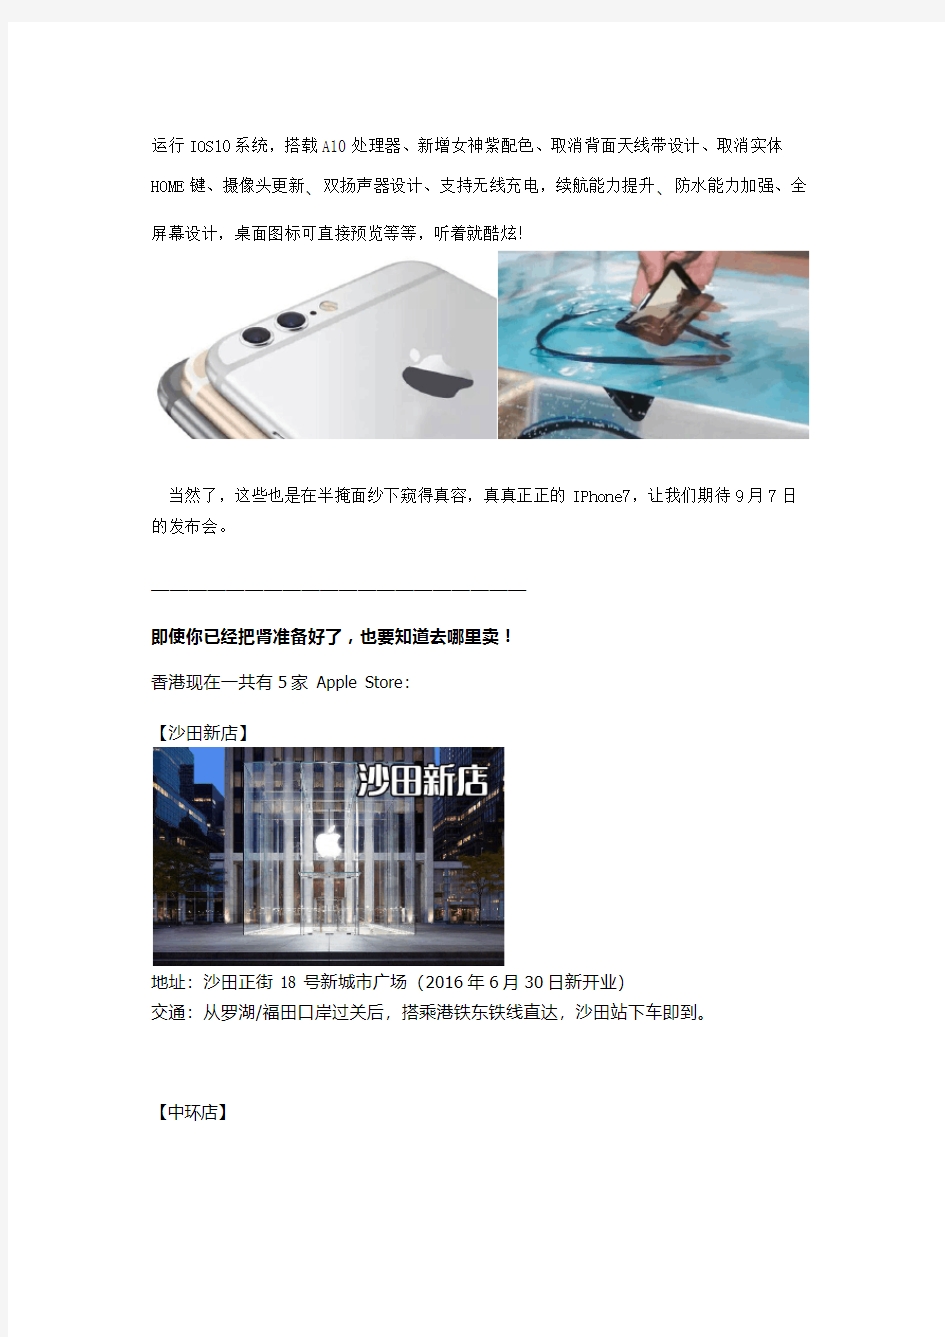 iPhone7上市,香港抢购最强攻略快收藏!